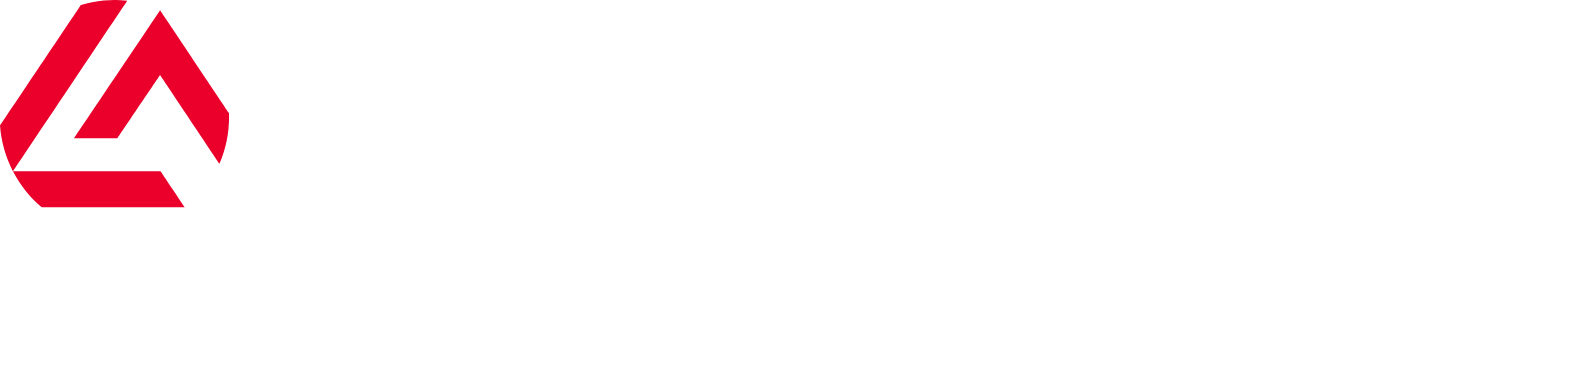 Eurobank Ergasias Services and Holdings logo grand pour les fonds sombres (PNG transparent)